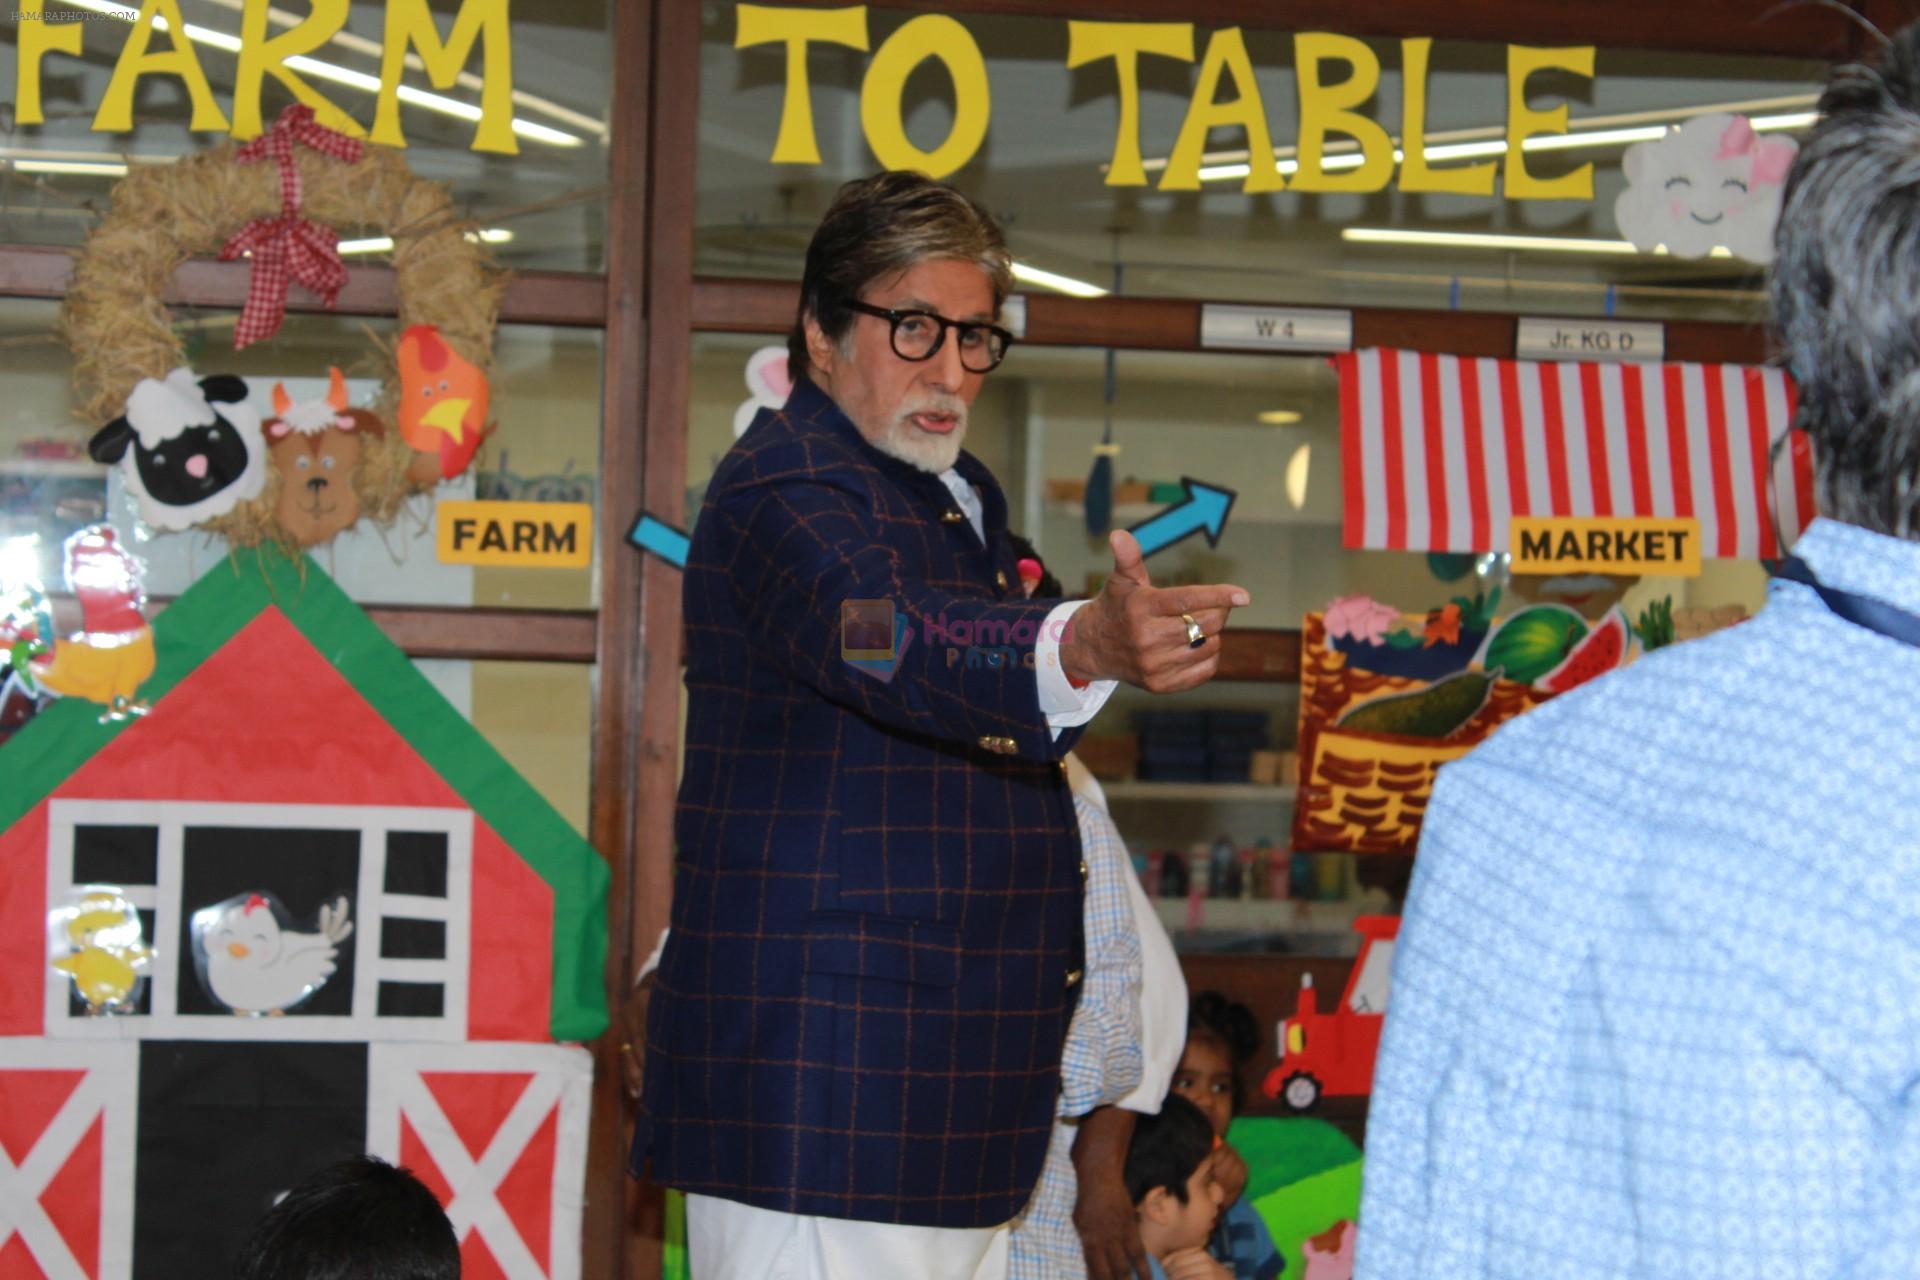 Amitabh Bachchan at the launch of Ndtv Banega Swasth India Season 6 in juhu on 19th Aug 2019